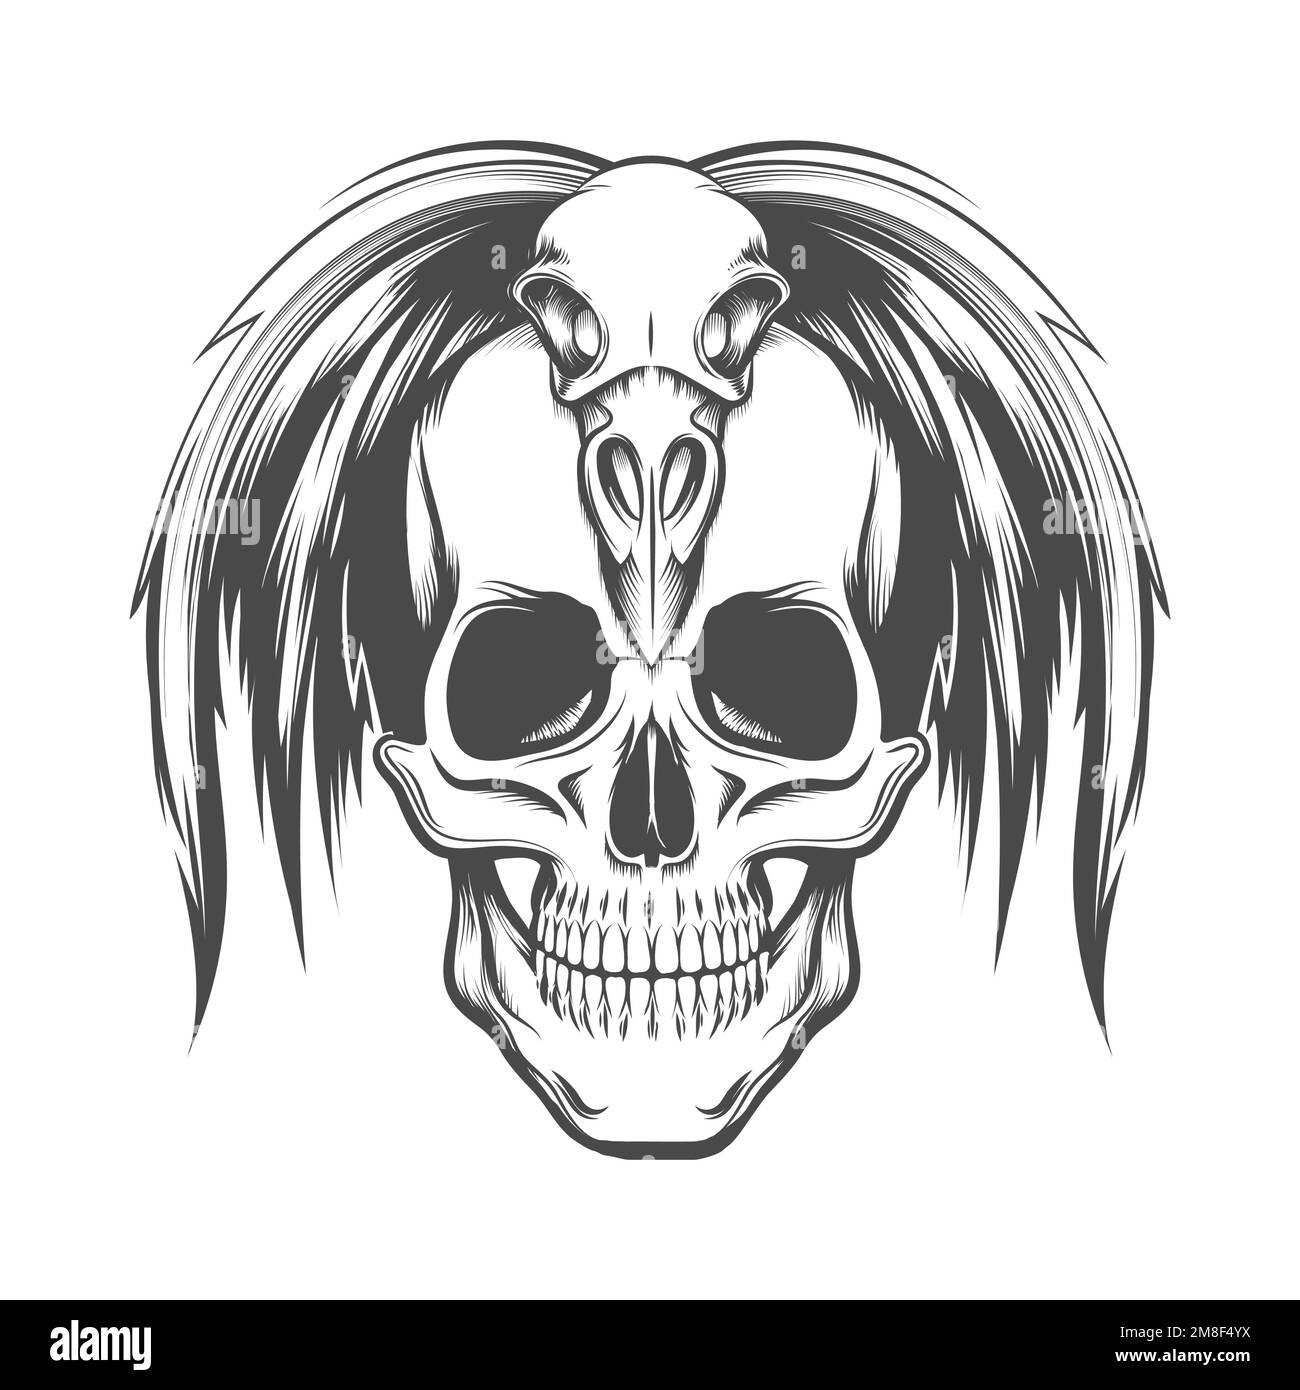 Tattoo of Human Skull in Bird Skull Headdress isolated on white background. Vector illustration. Stock Vector